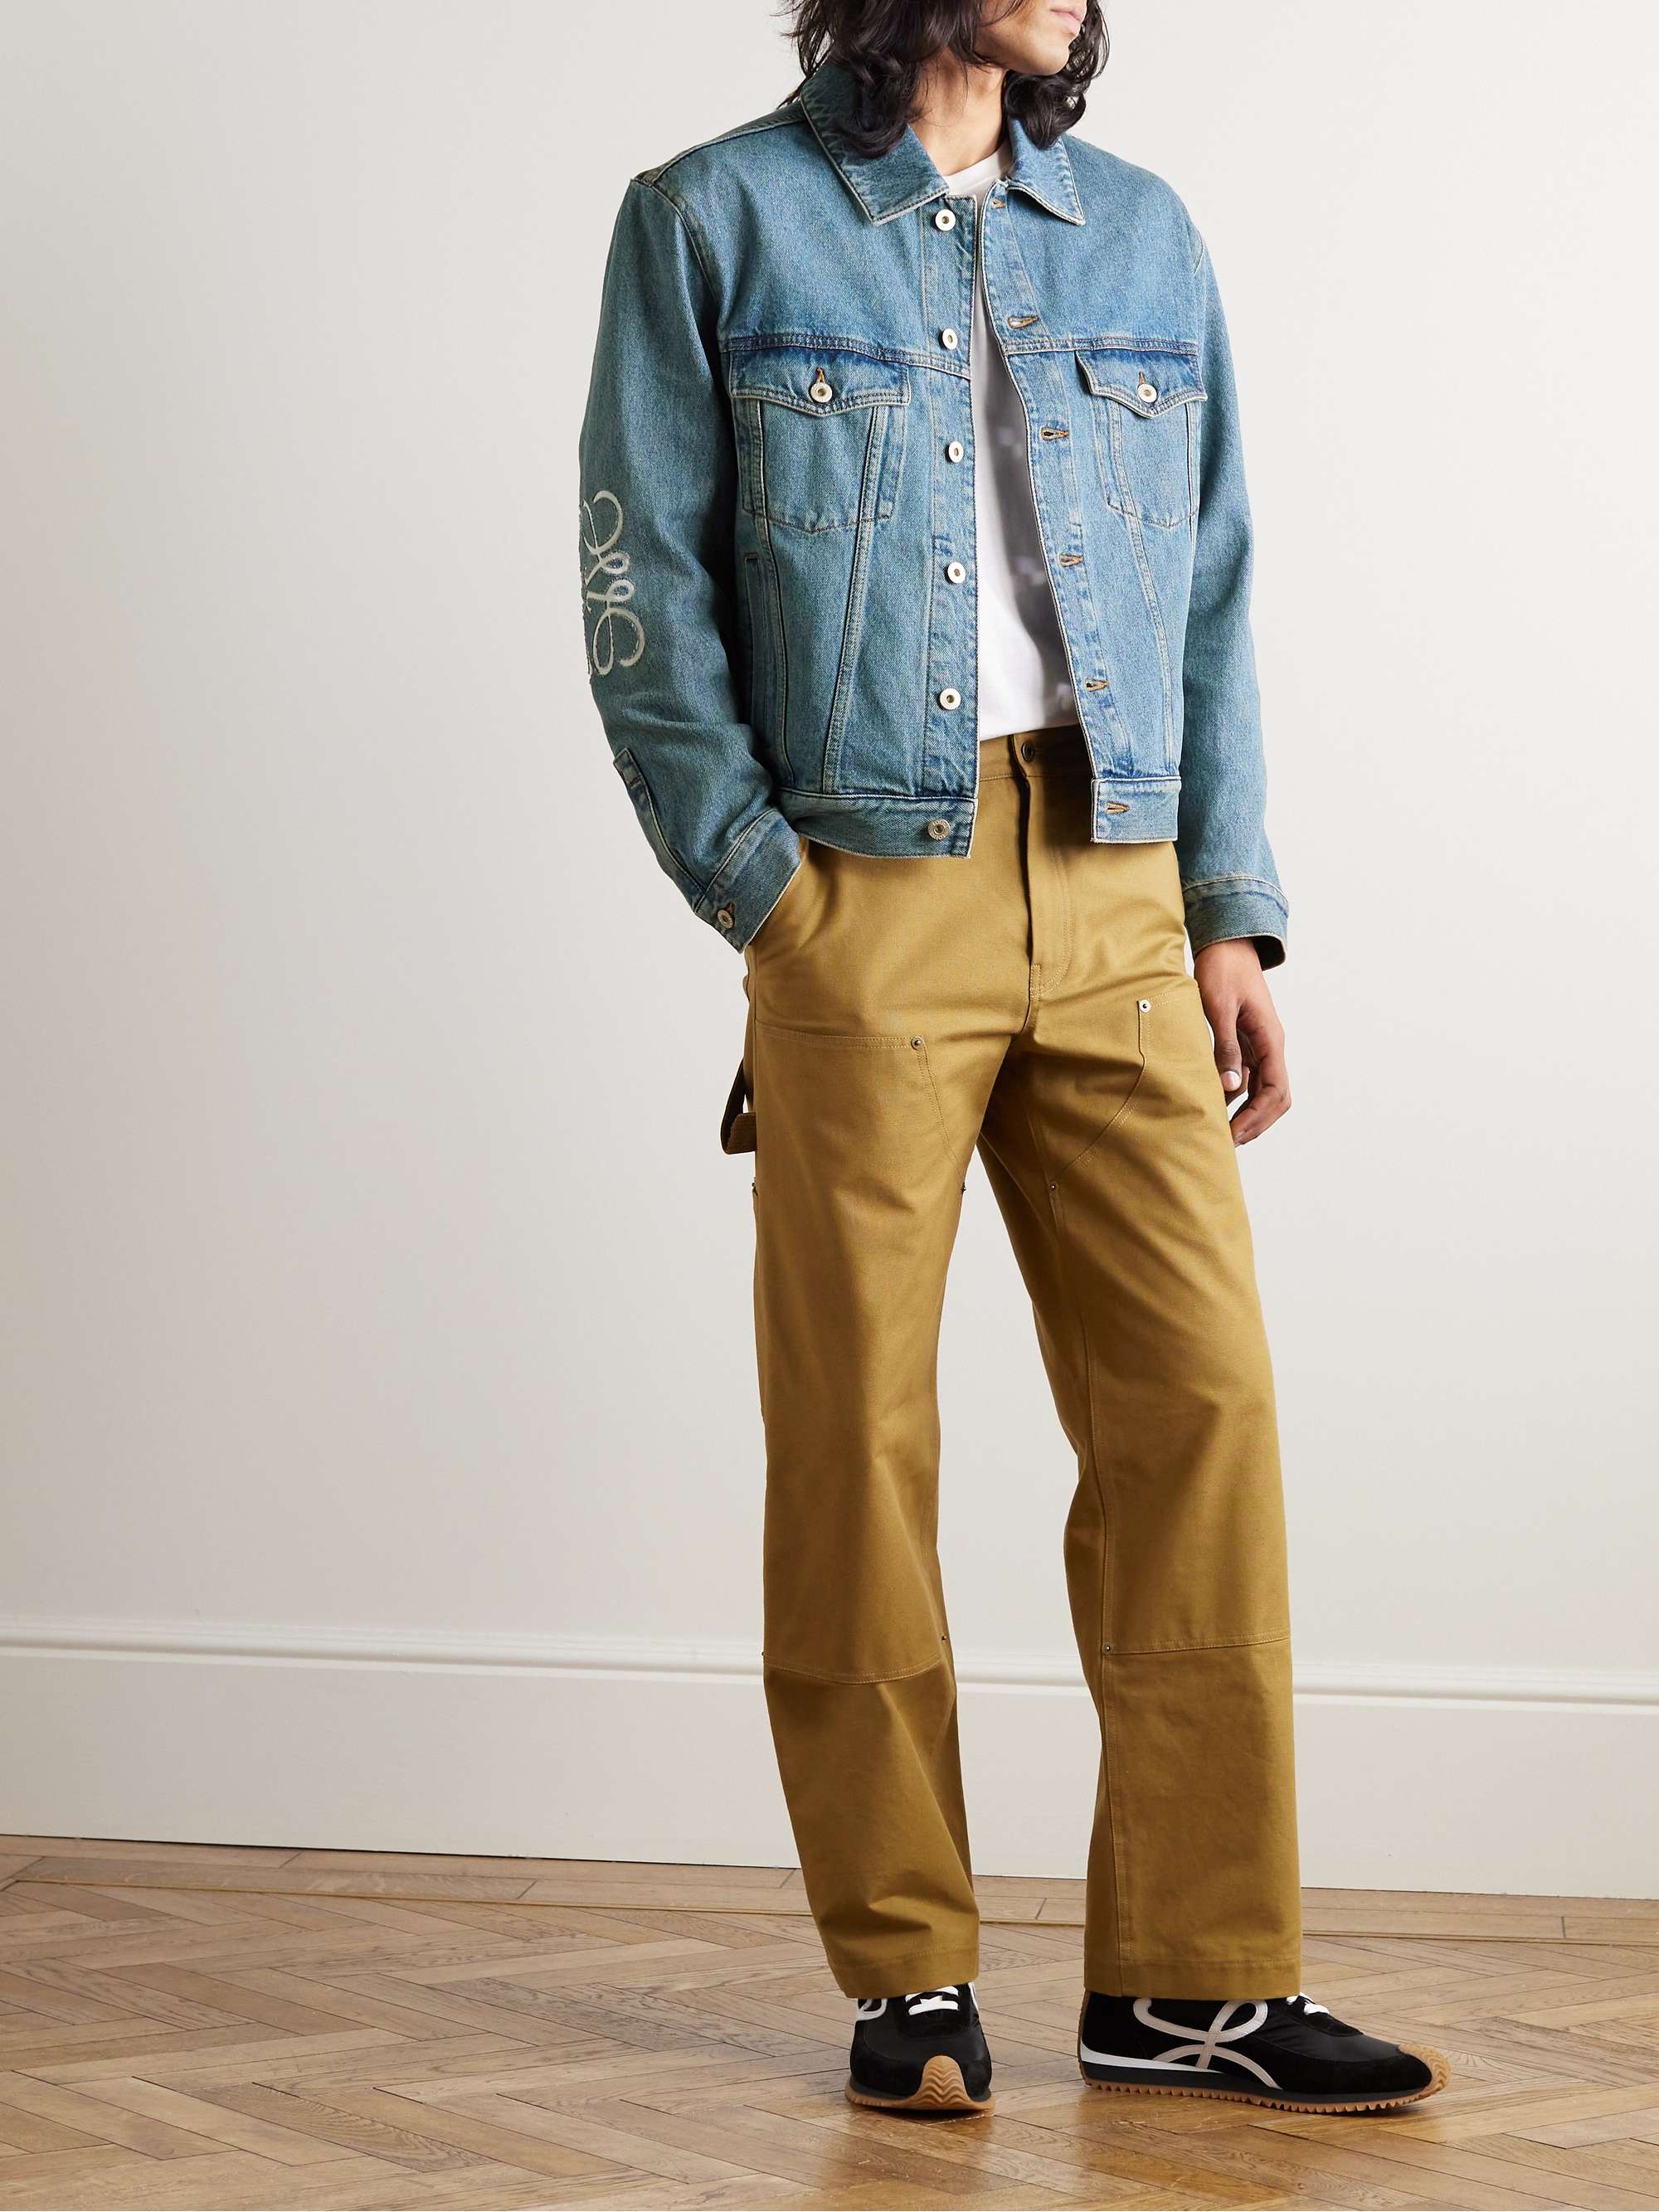 LOEWE Anagram Leather-Trimmed Cutout Denim Trucker Jacket for Men | MR ...